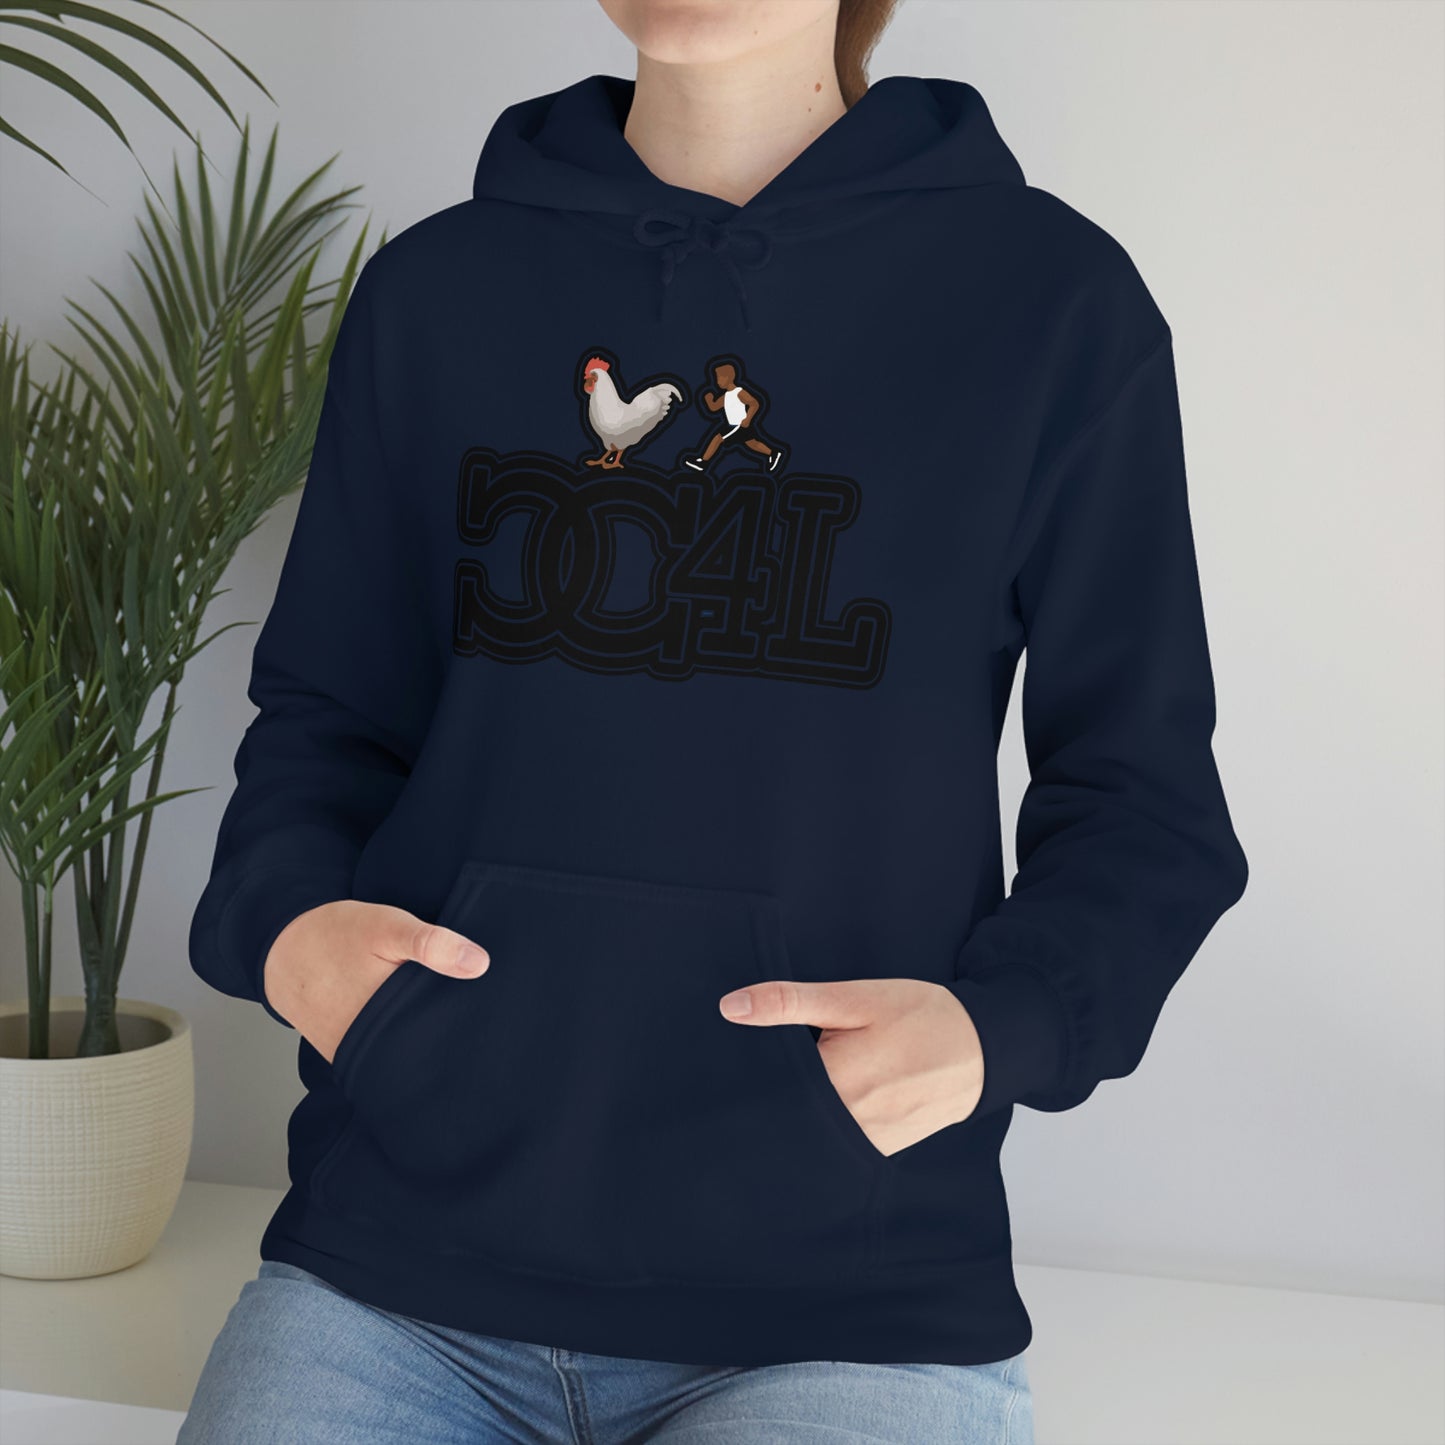 Unisex CC4L hoodie